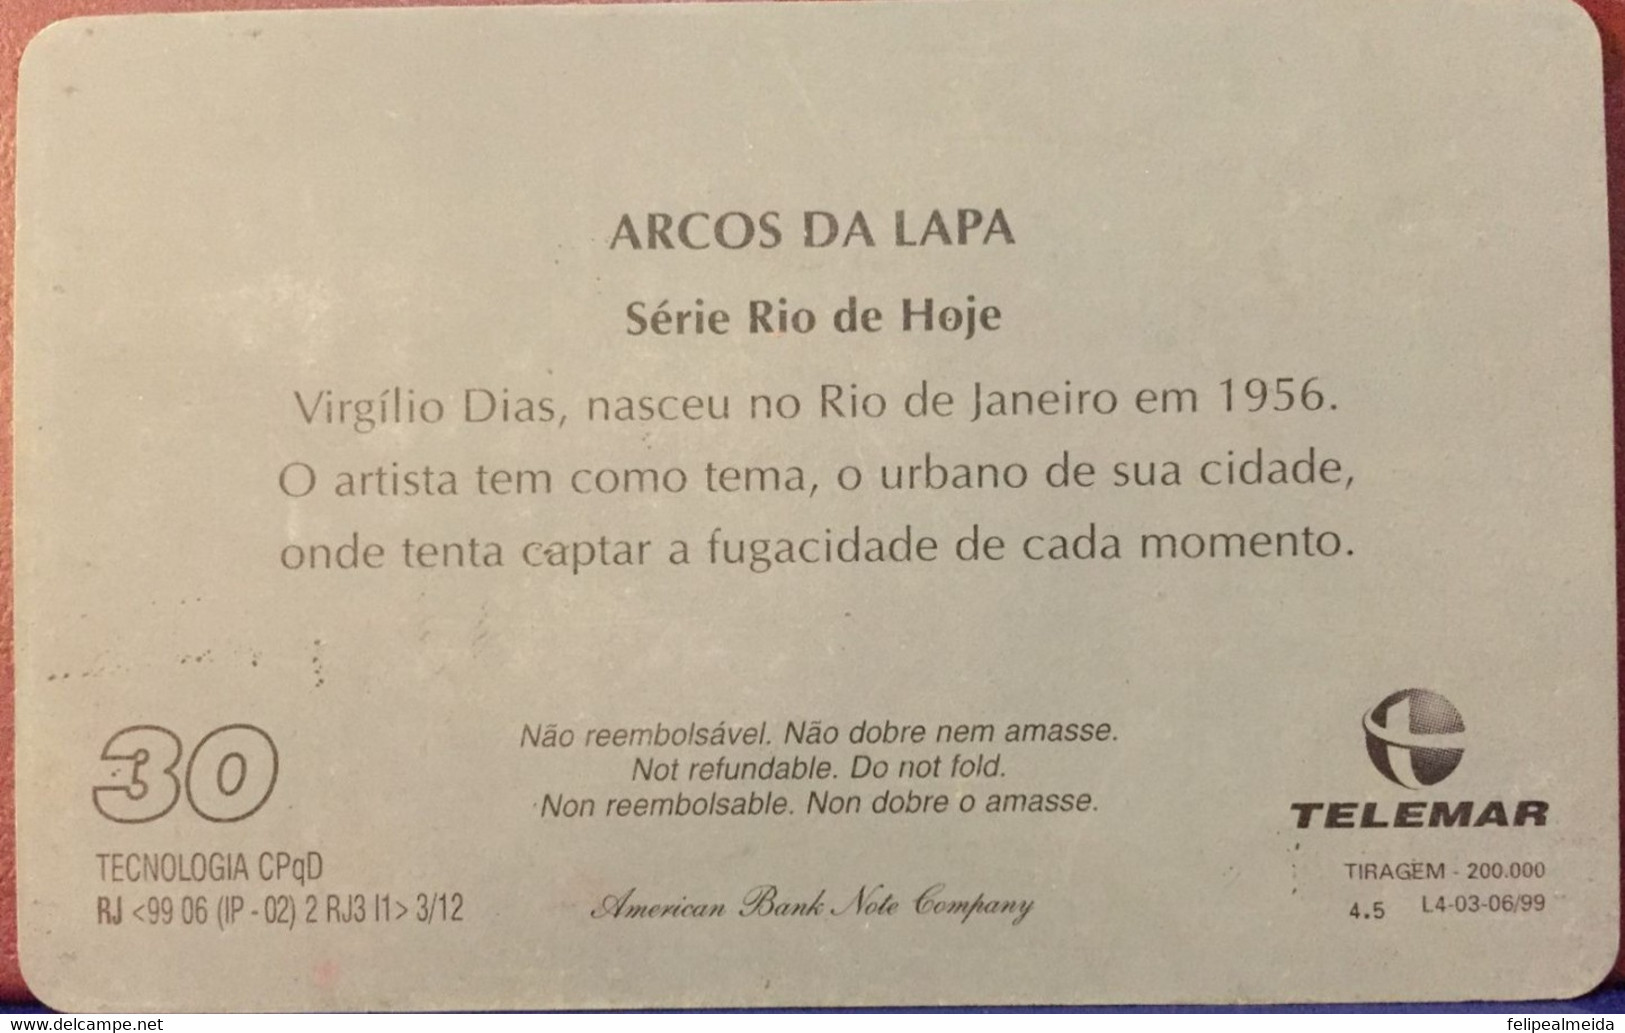 Phone Card Manufactured By Telemar In 1999 - Series Rio Do Hoje - Painter Virgílio Dias - Arcos Da Lapa - Painting